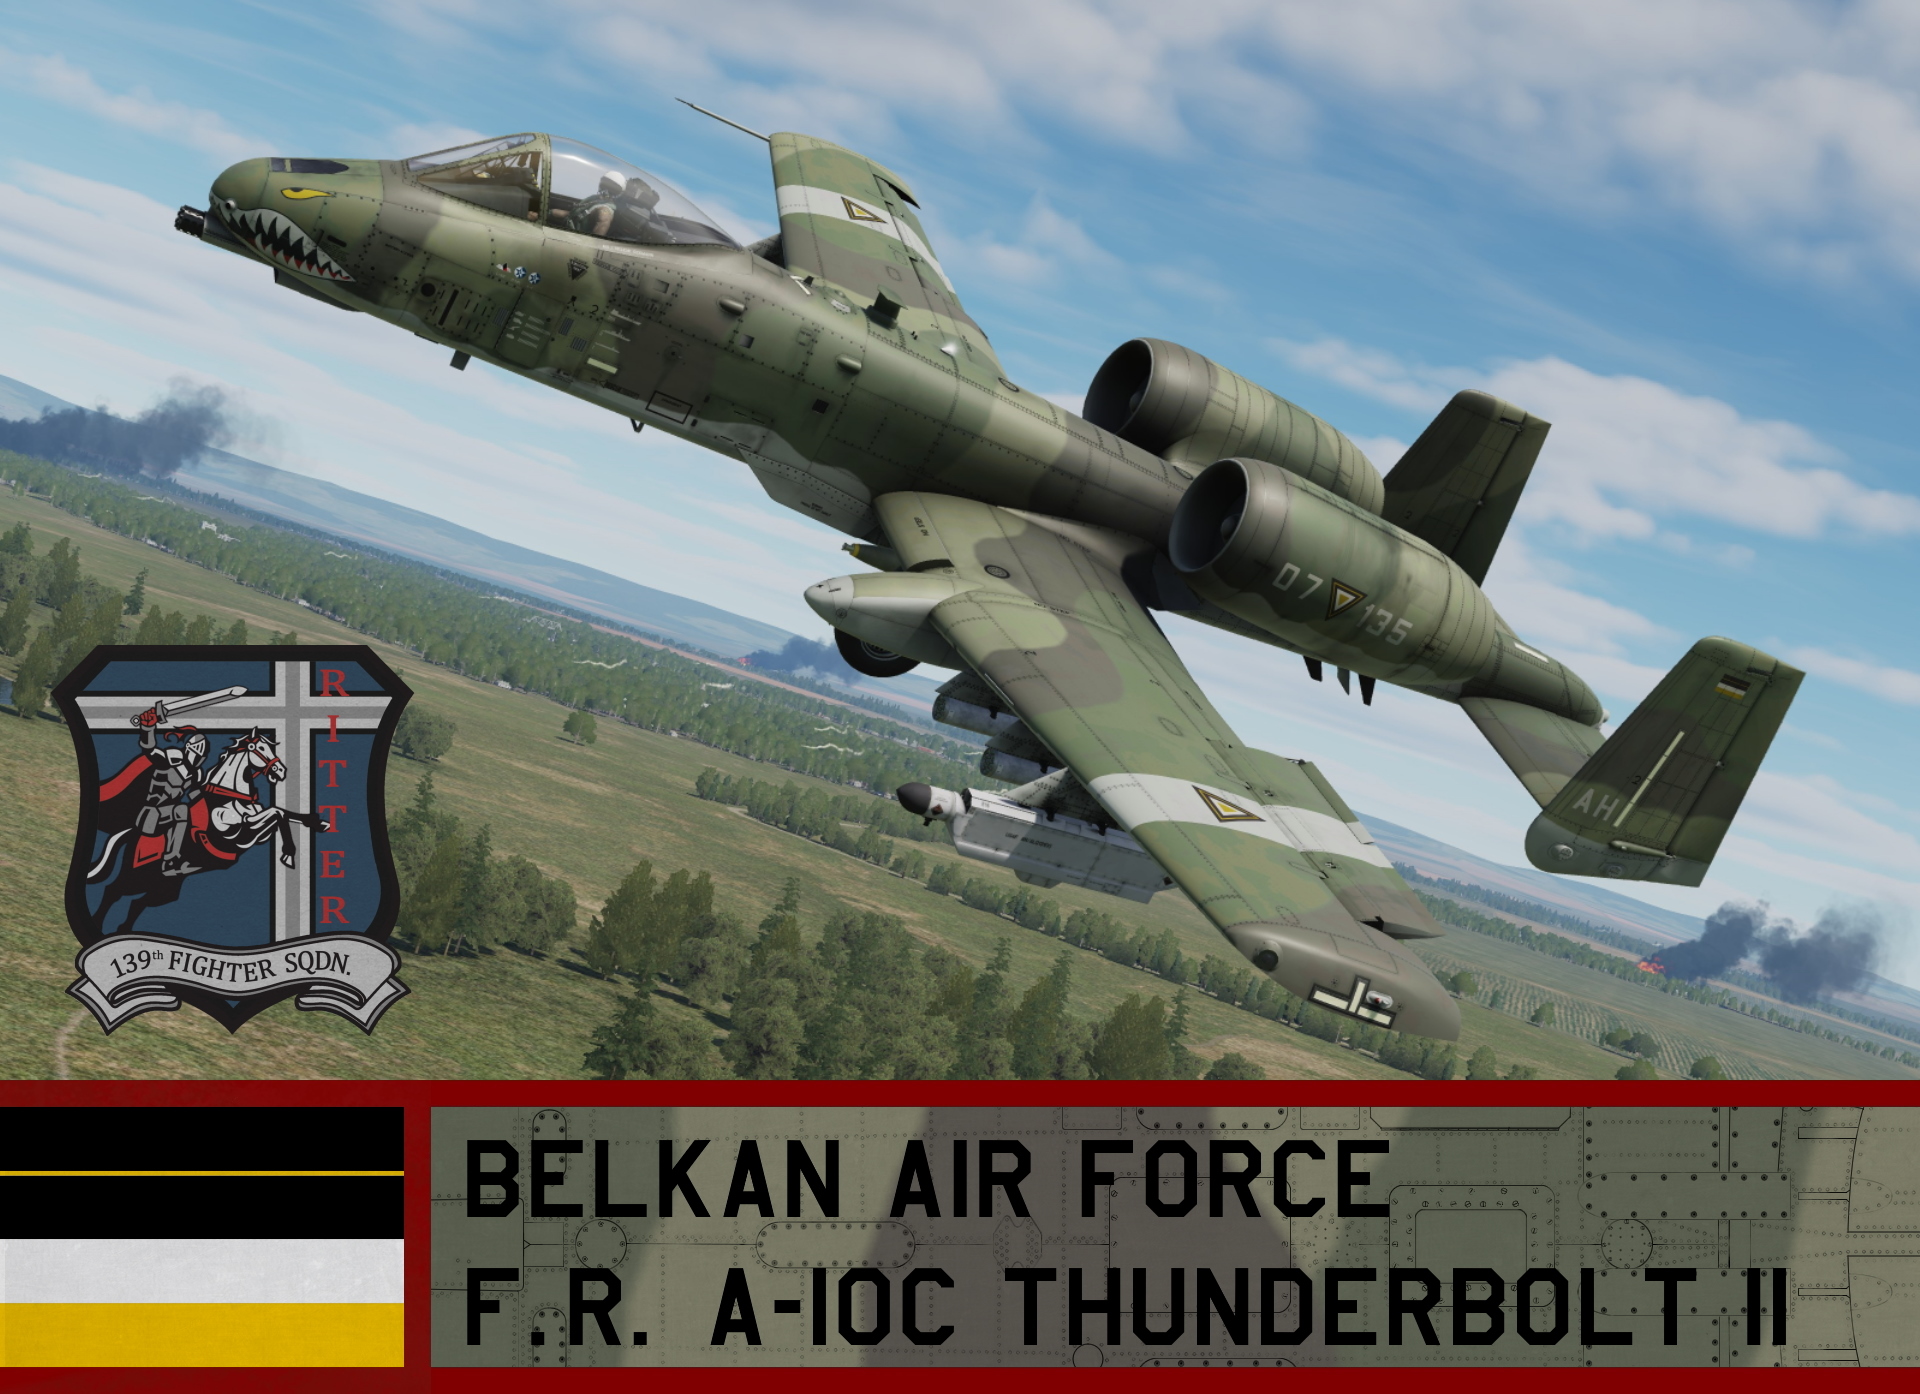 Belkan Air Force A-10C Thunderbolt II - Ace Combat Zero (139th TFS)